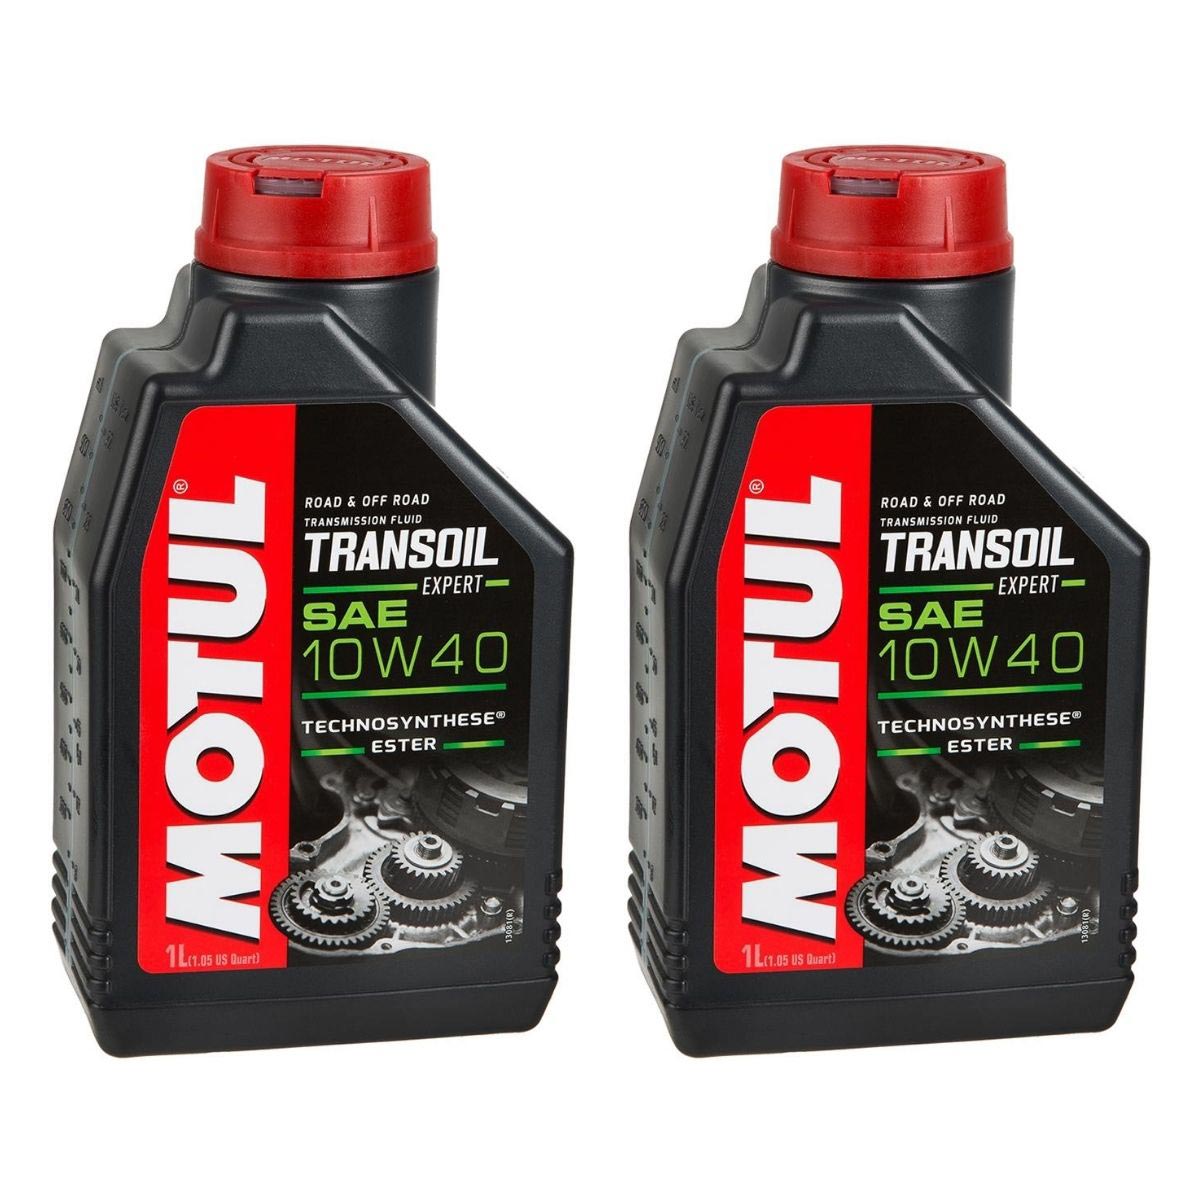 Motul Transmission Fluid Expert Set of 2, 1 L each, 10W40